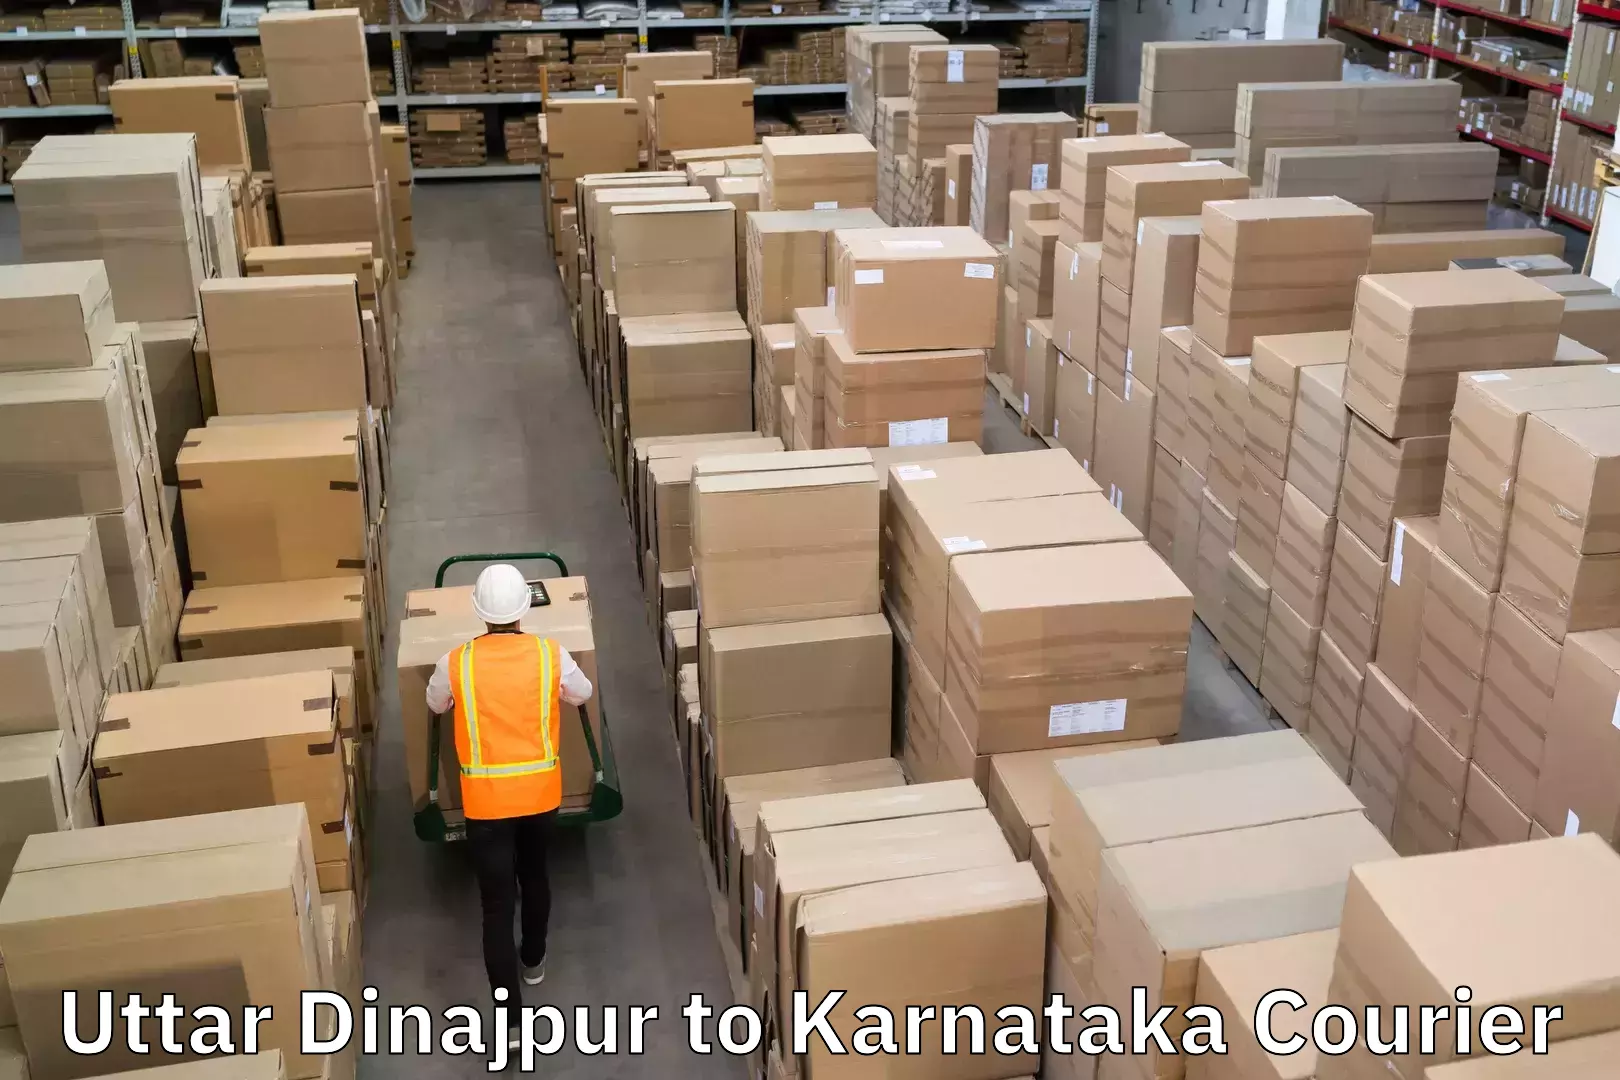 Fast delivery service Uttar Dinajpur to Karnataka